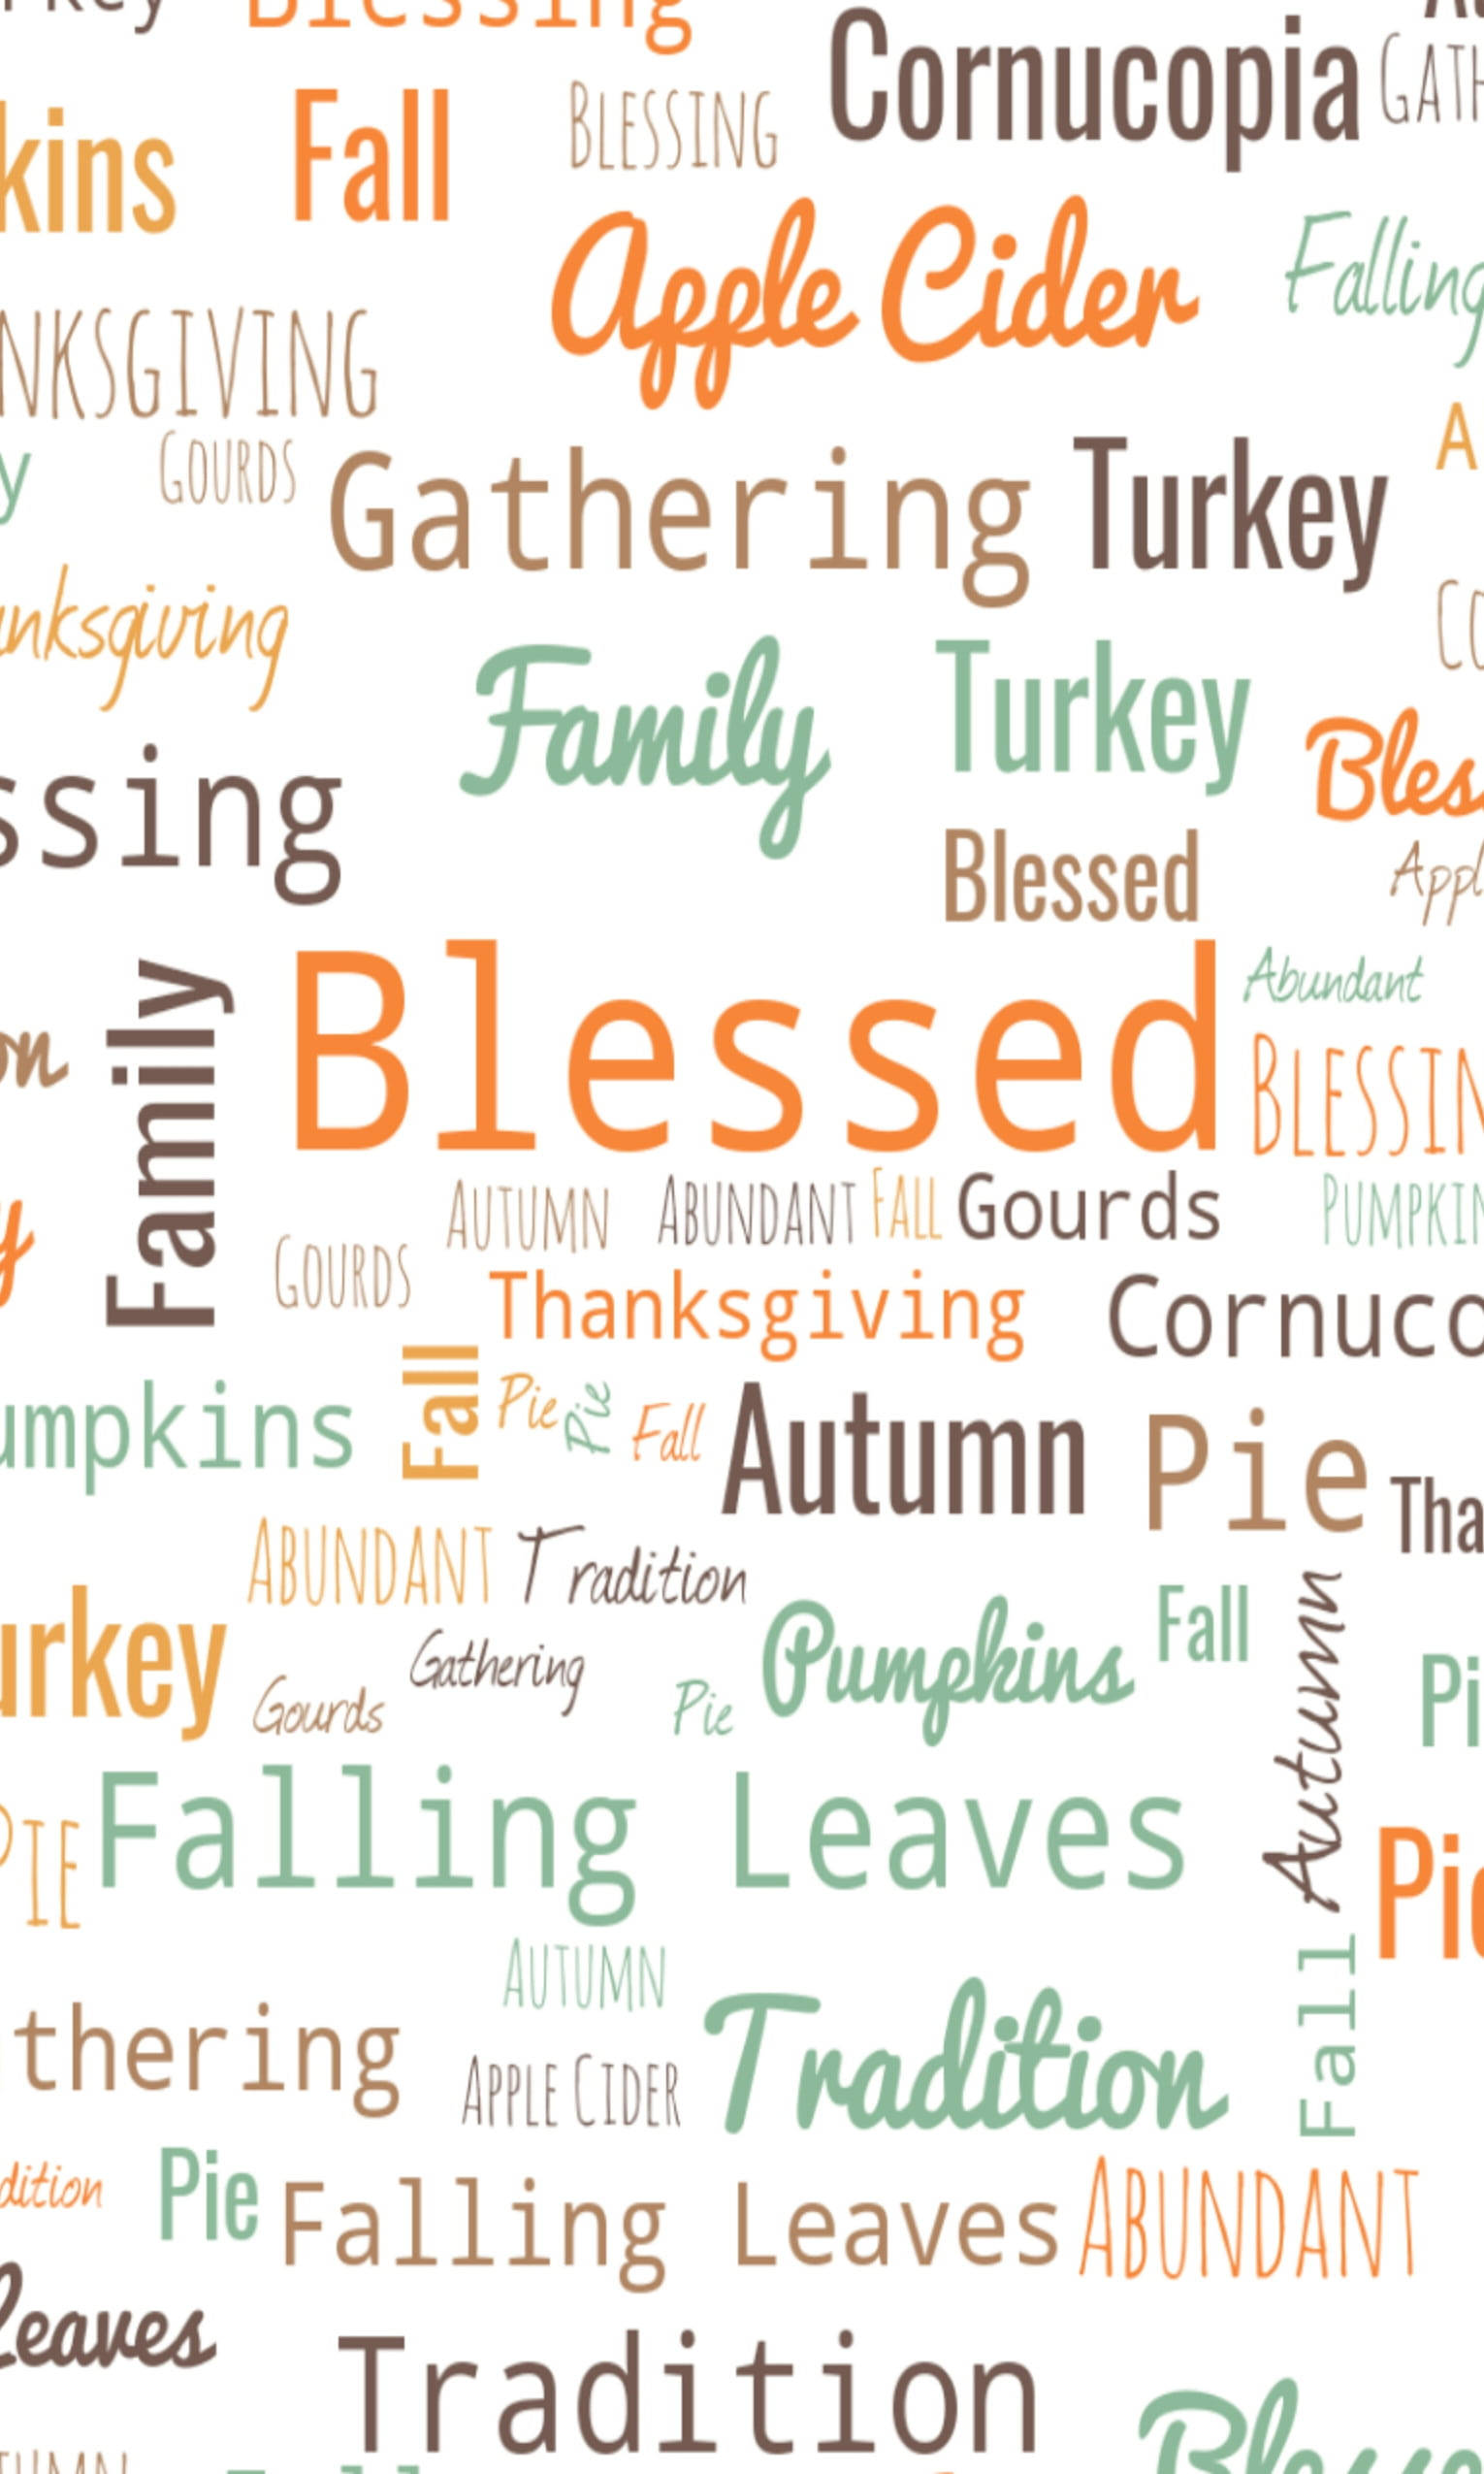 Download Fun Thanksgiving Image Full Of Words iPhone Wallpaper